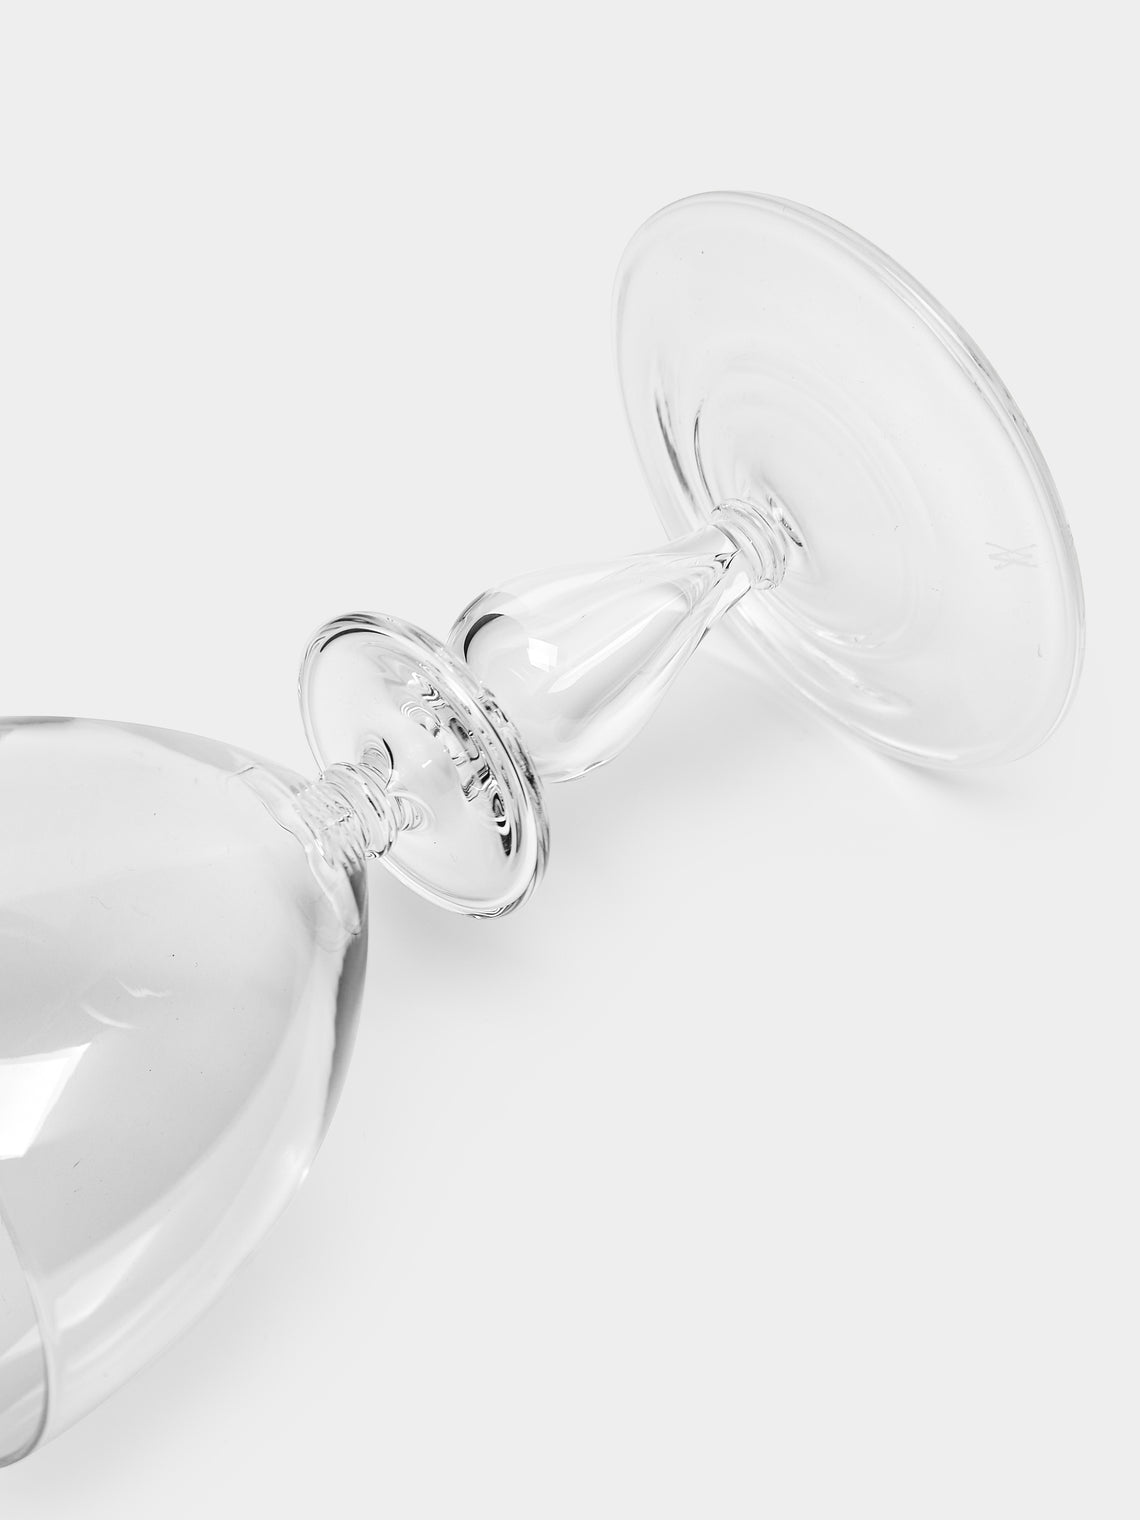 Astier de Villatte - Adrien Small Wine Glass -  - ABASK